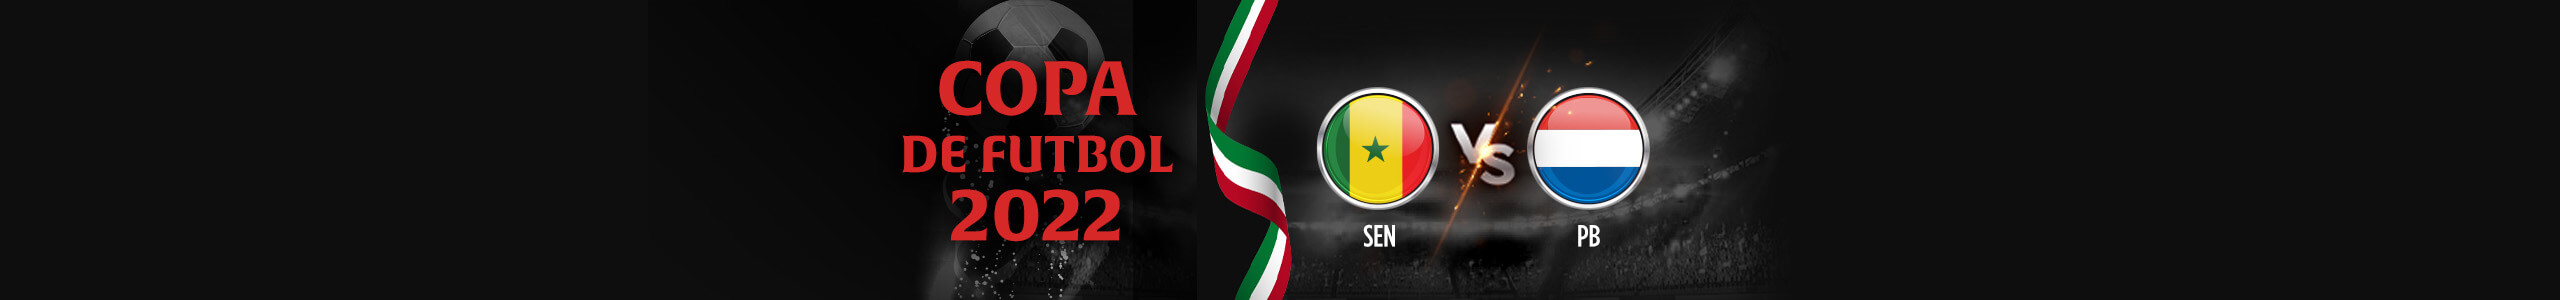 Copa Mundial 2022 - Senegal vs Paises Bajos